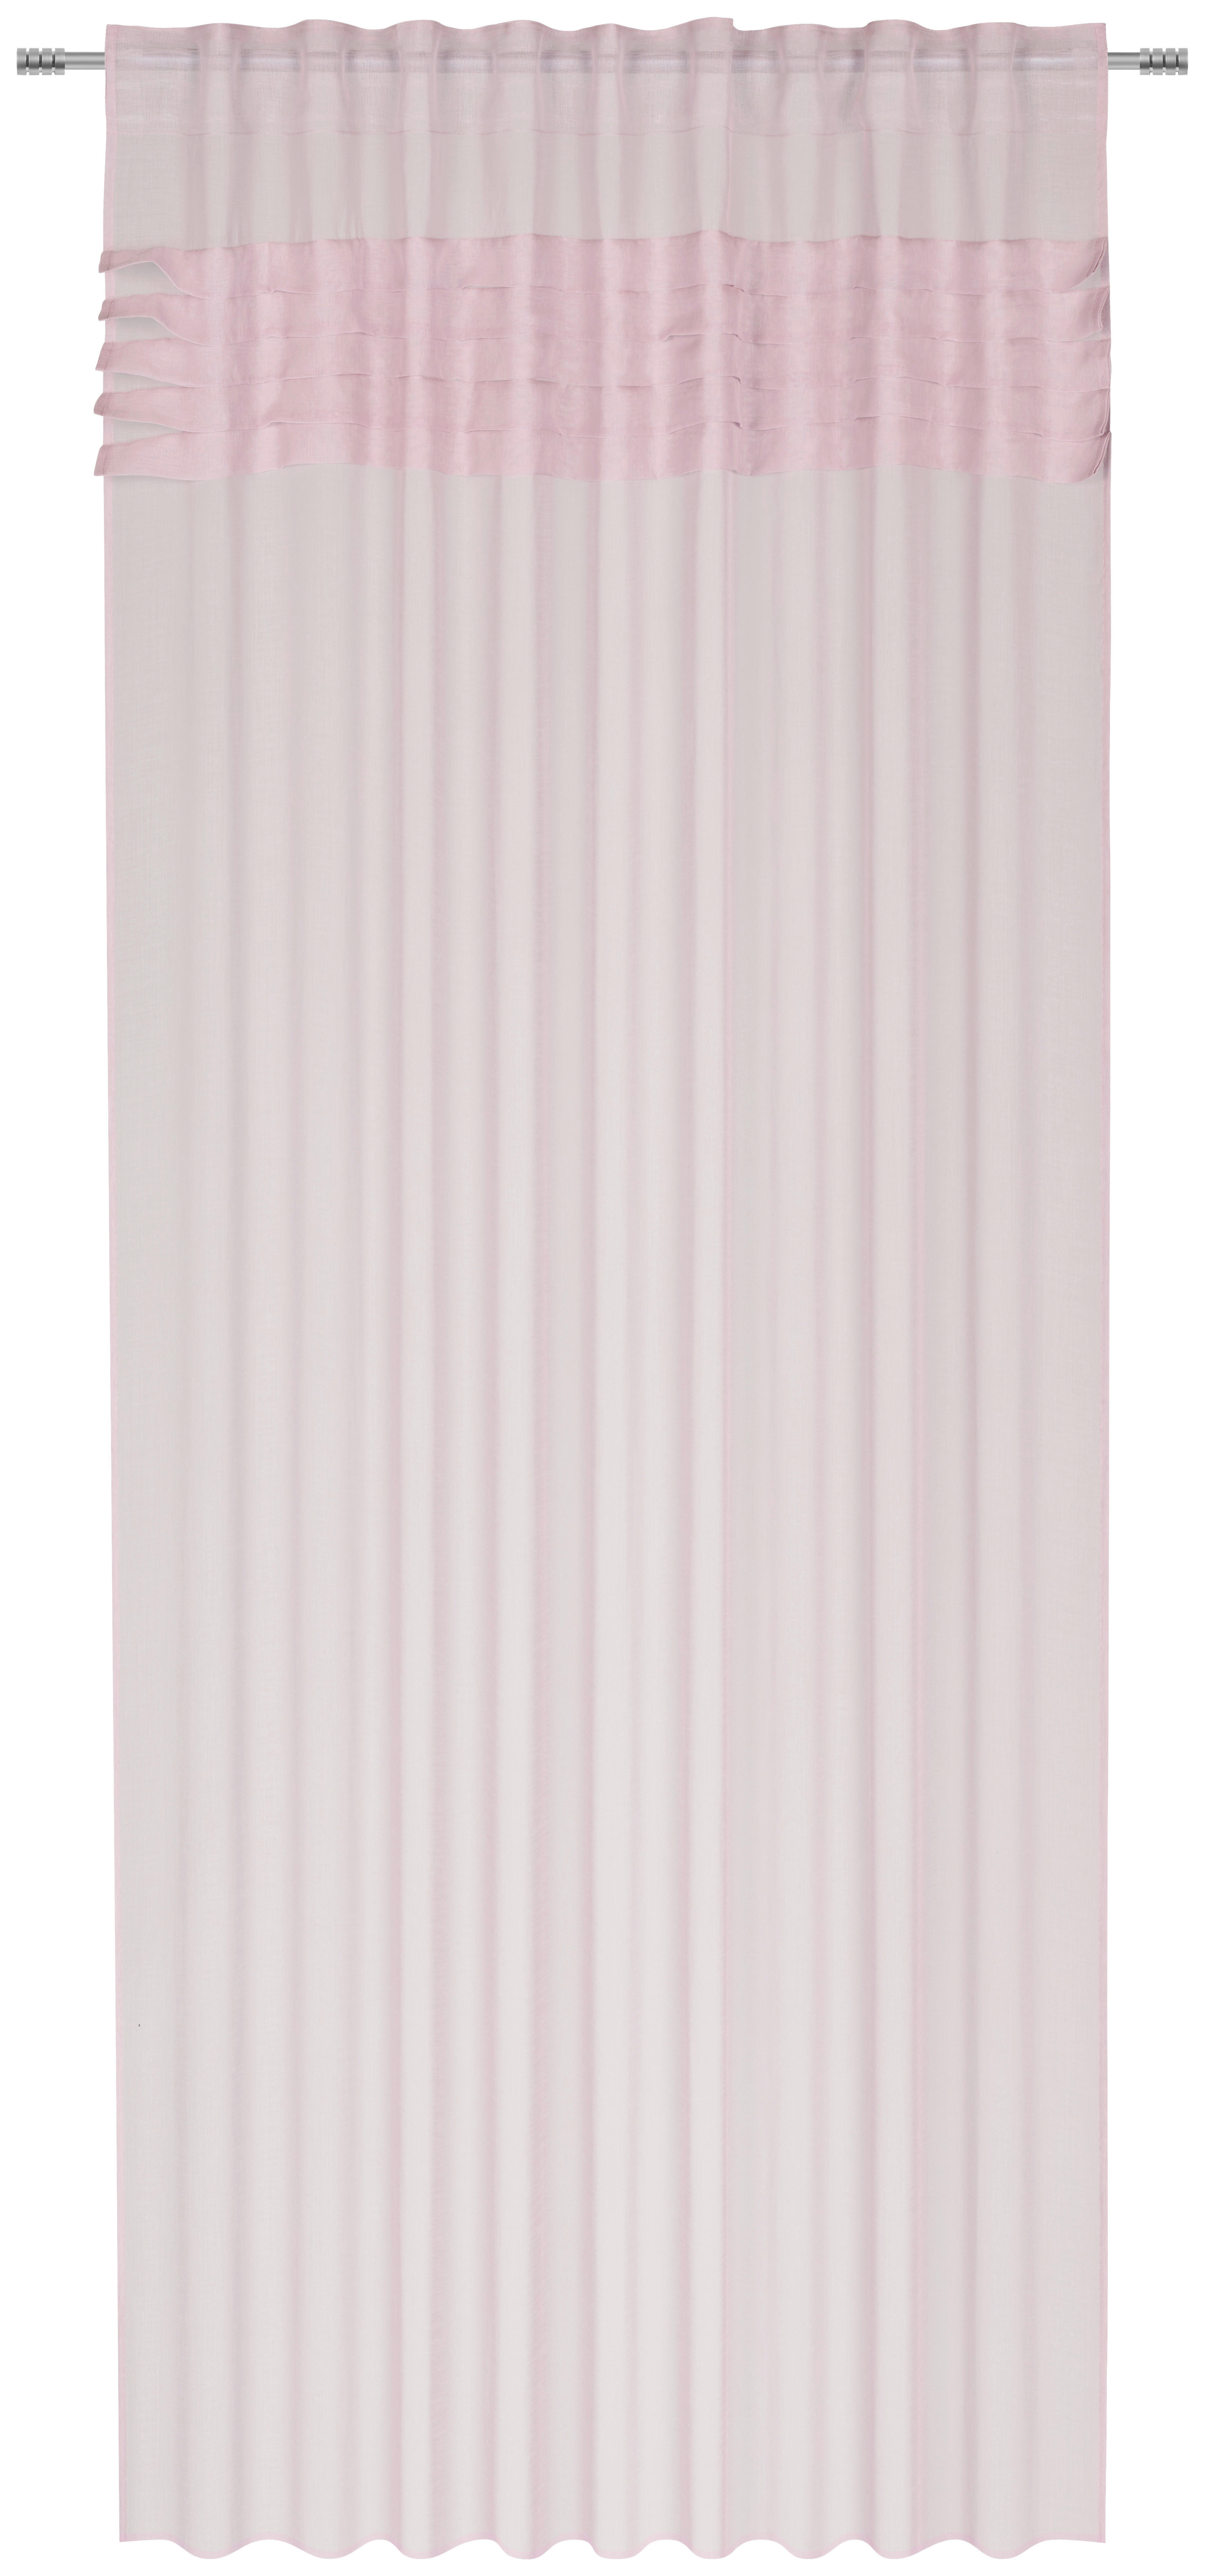 FERTIGVORHANG halbtransparent  - Rosa, KONVENTIONELL, Textil (140/245cm) - Esposa